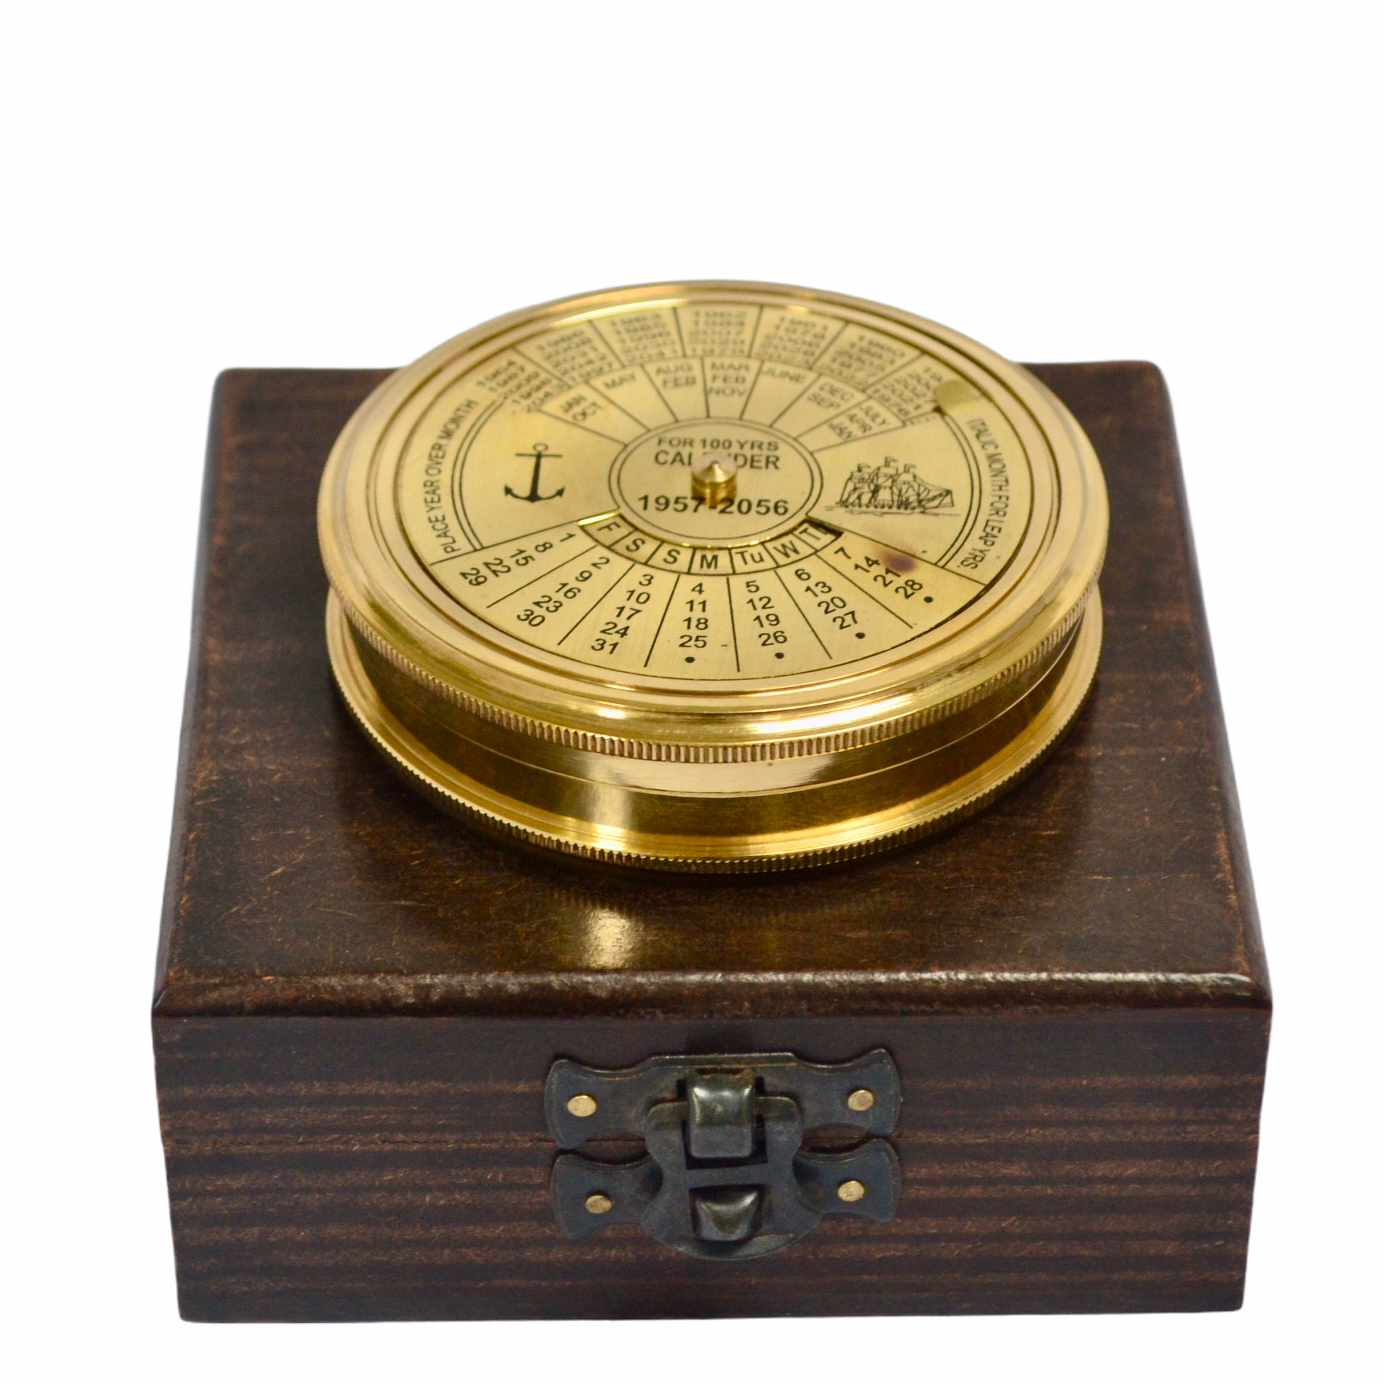 3" Large Brass Calendar Compass in a wood box